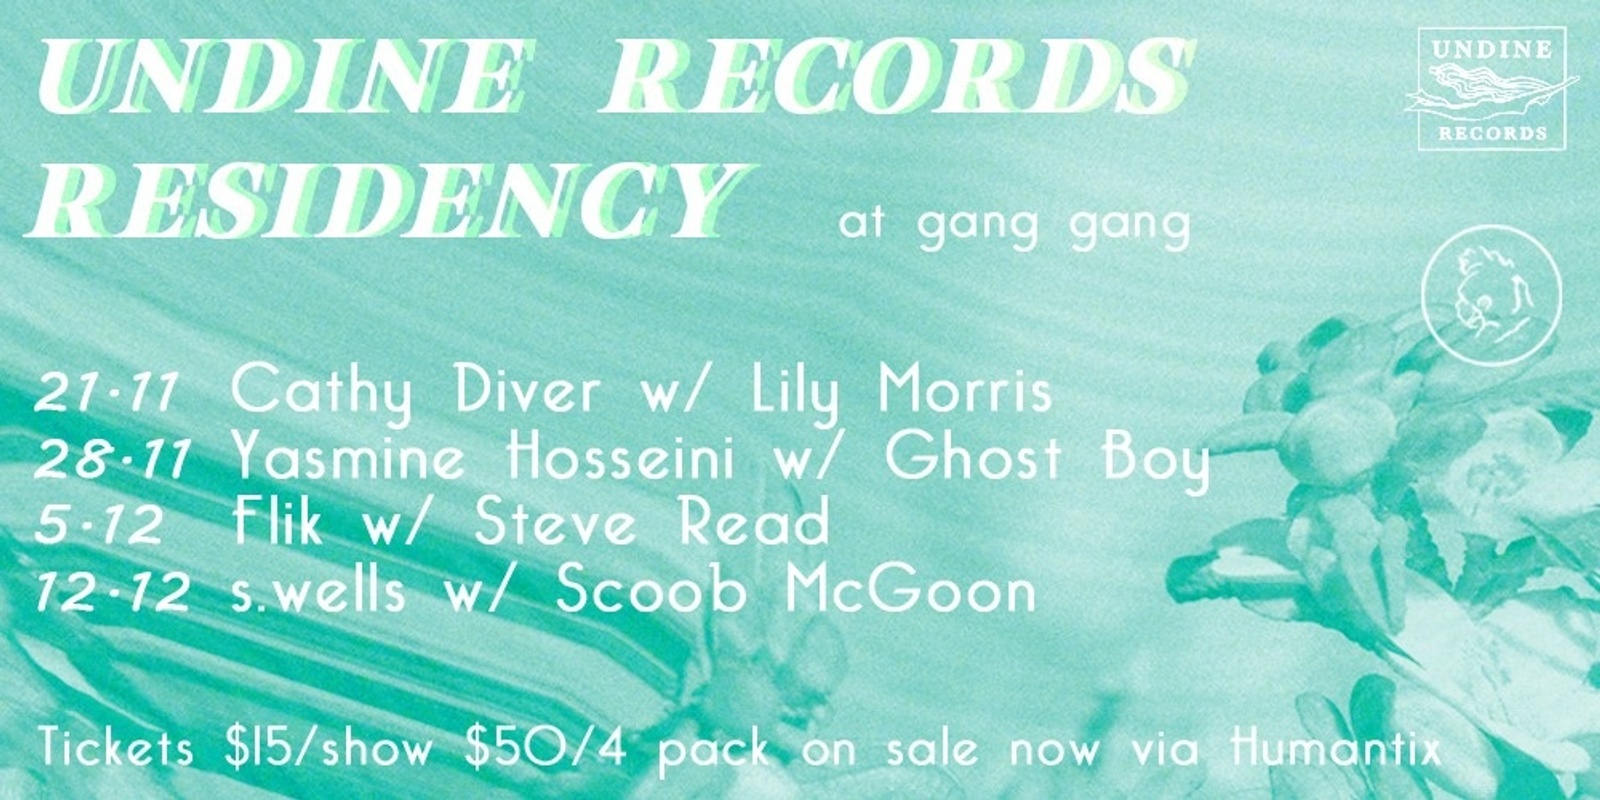 Banner image for Undine Records Gang Gang Residency